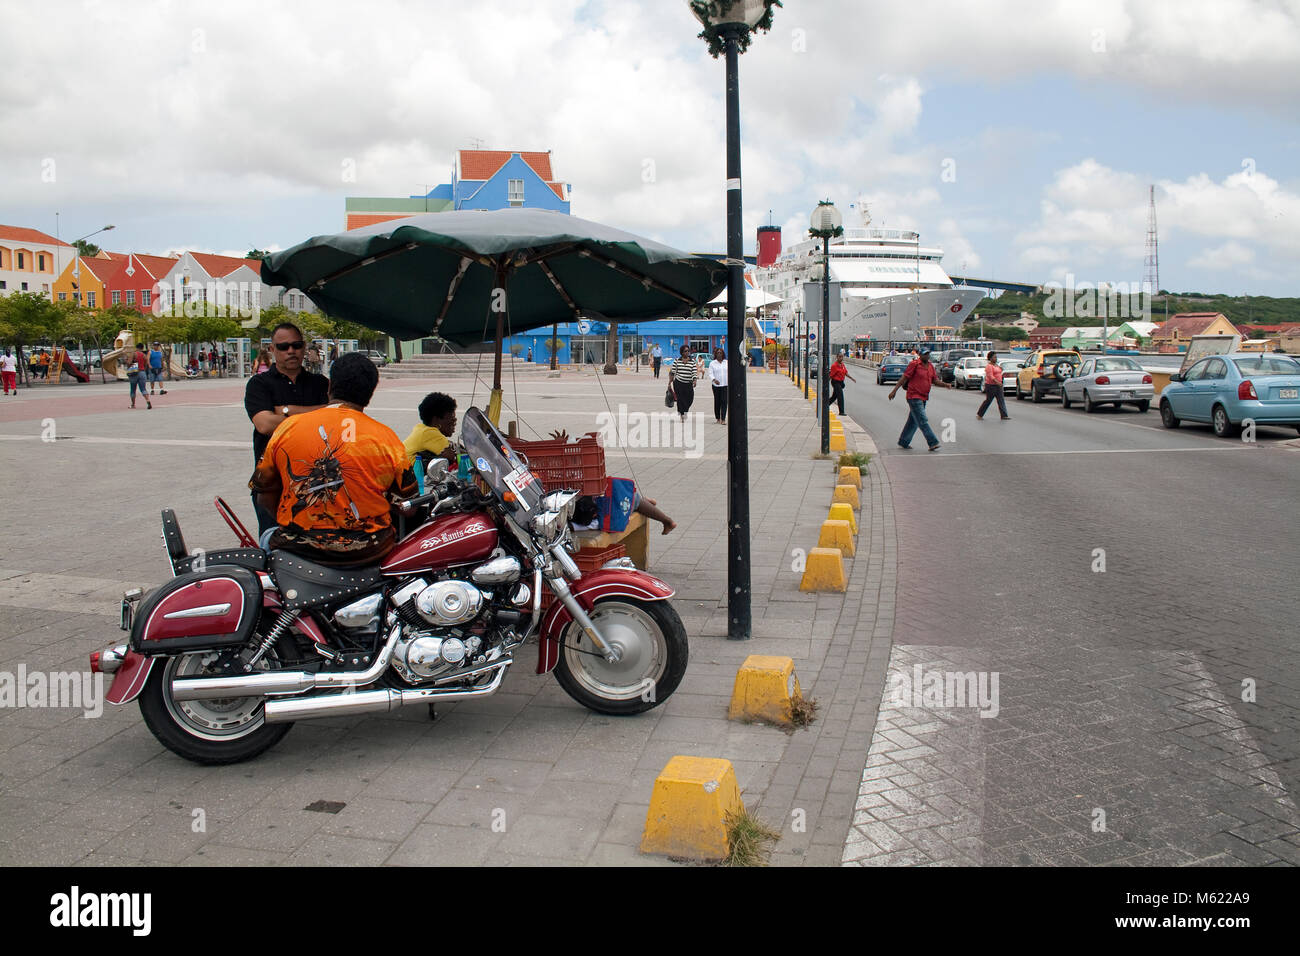 Man on motor bike at a pedlar, Otrobanda district, Willemstad, Curacao, Netherlands Antilles, Caribbean Stock Photo